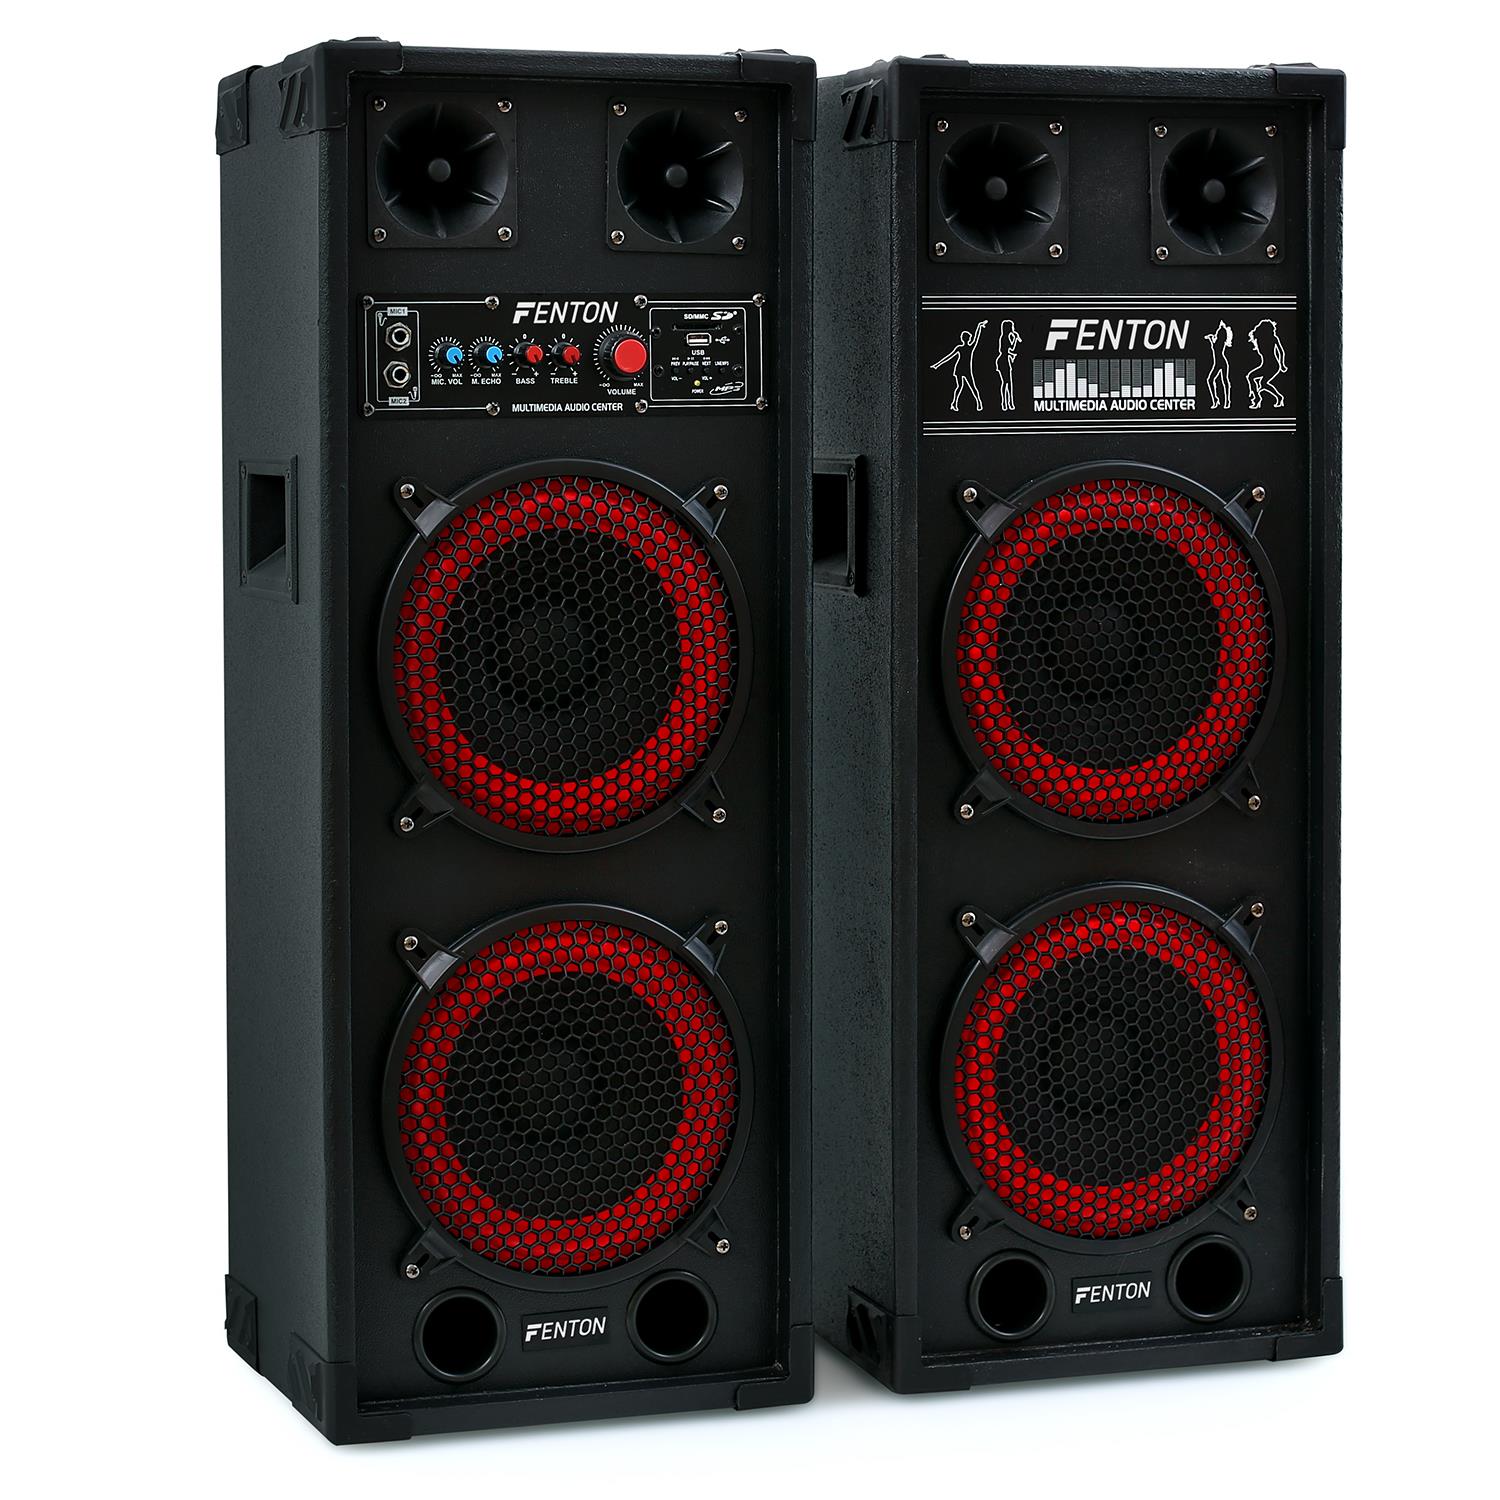 Retourdeal - Fenton SPB-28 Actieve speakerset 2x 8" 800W met Bluetooth